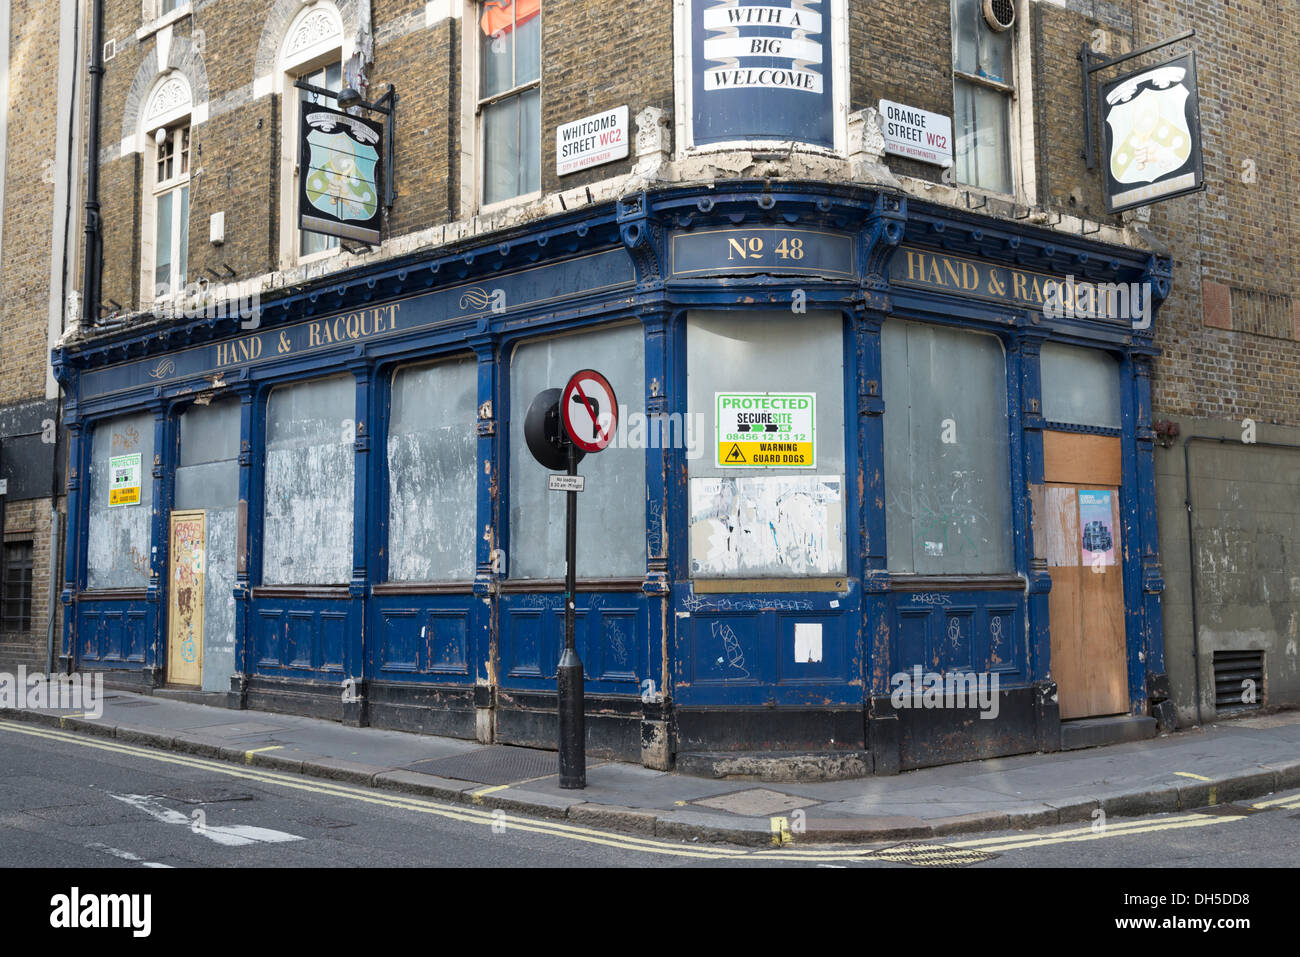 Die Hand & Racquet geentert, Pub, der geschlossen ist, Whitcomb Street, London, UK Stockfoto